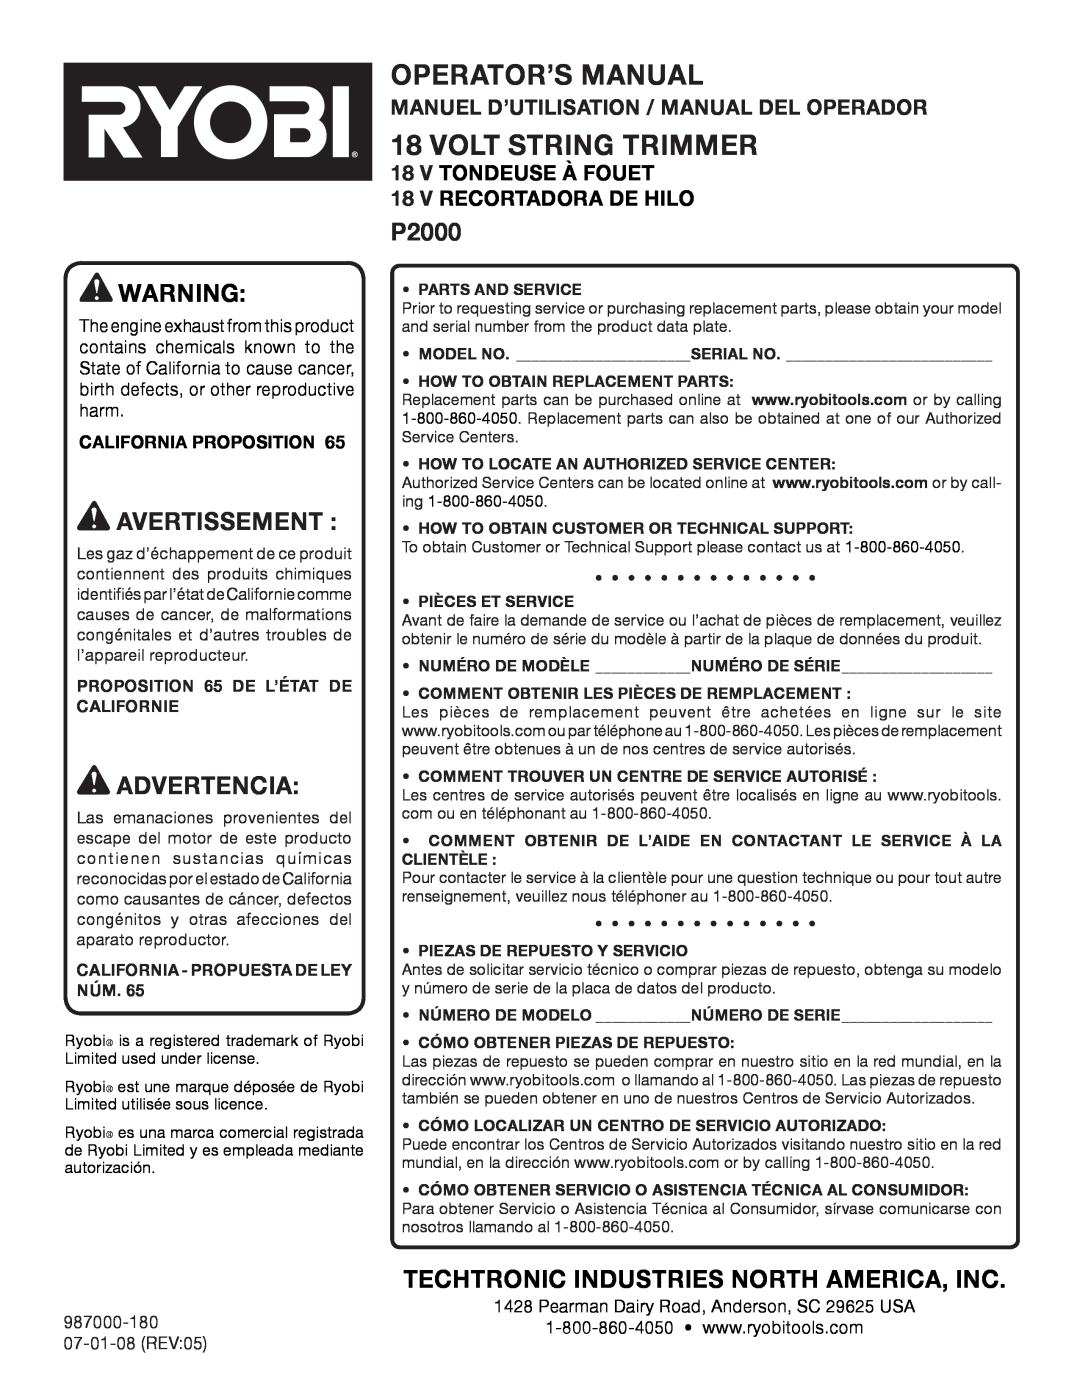 Ryobi P2000 Operator’S Manual, VOLT String Trimmer, Avertissement, Advertencia, Techtronic Industries North America, Inc 